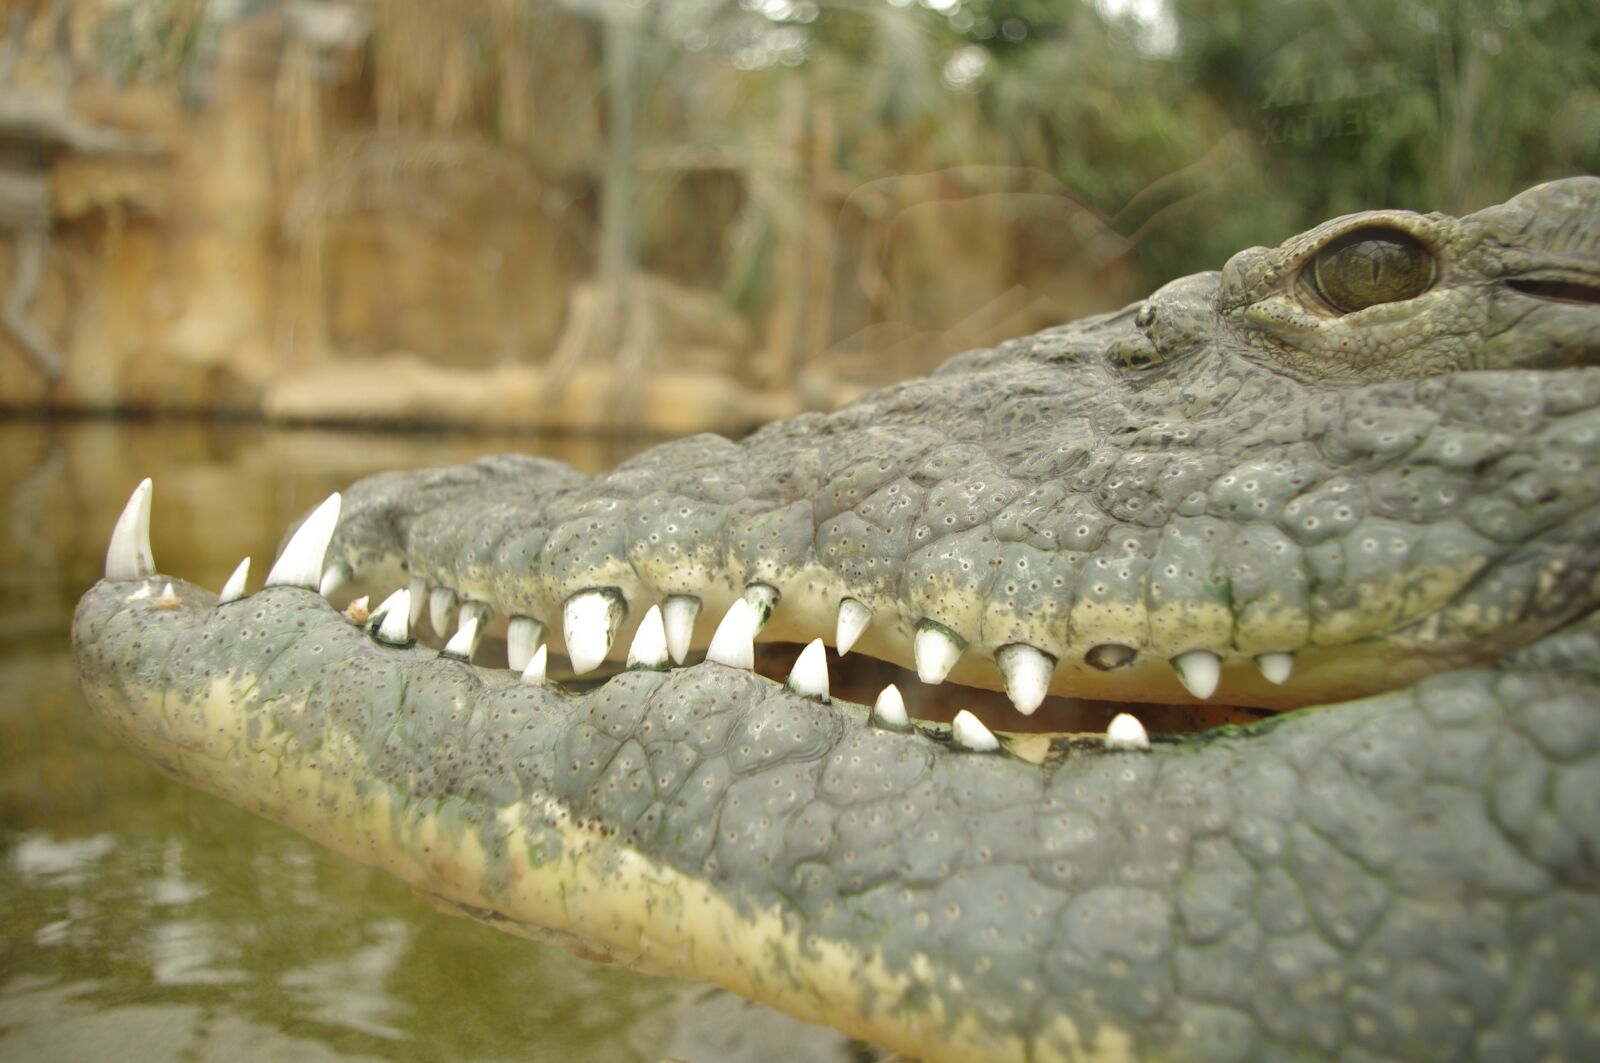 Pentax K-r sample photo. "Crocodile, aligator, reptile" photography